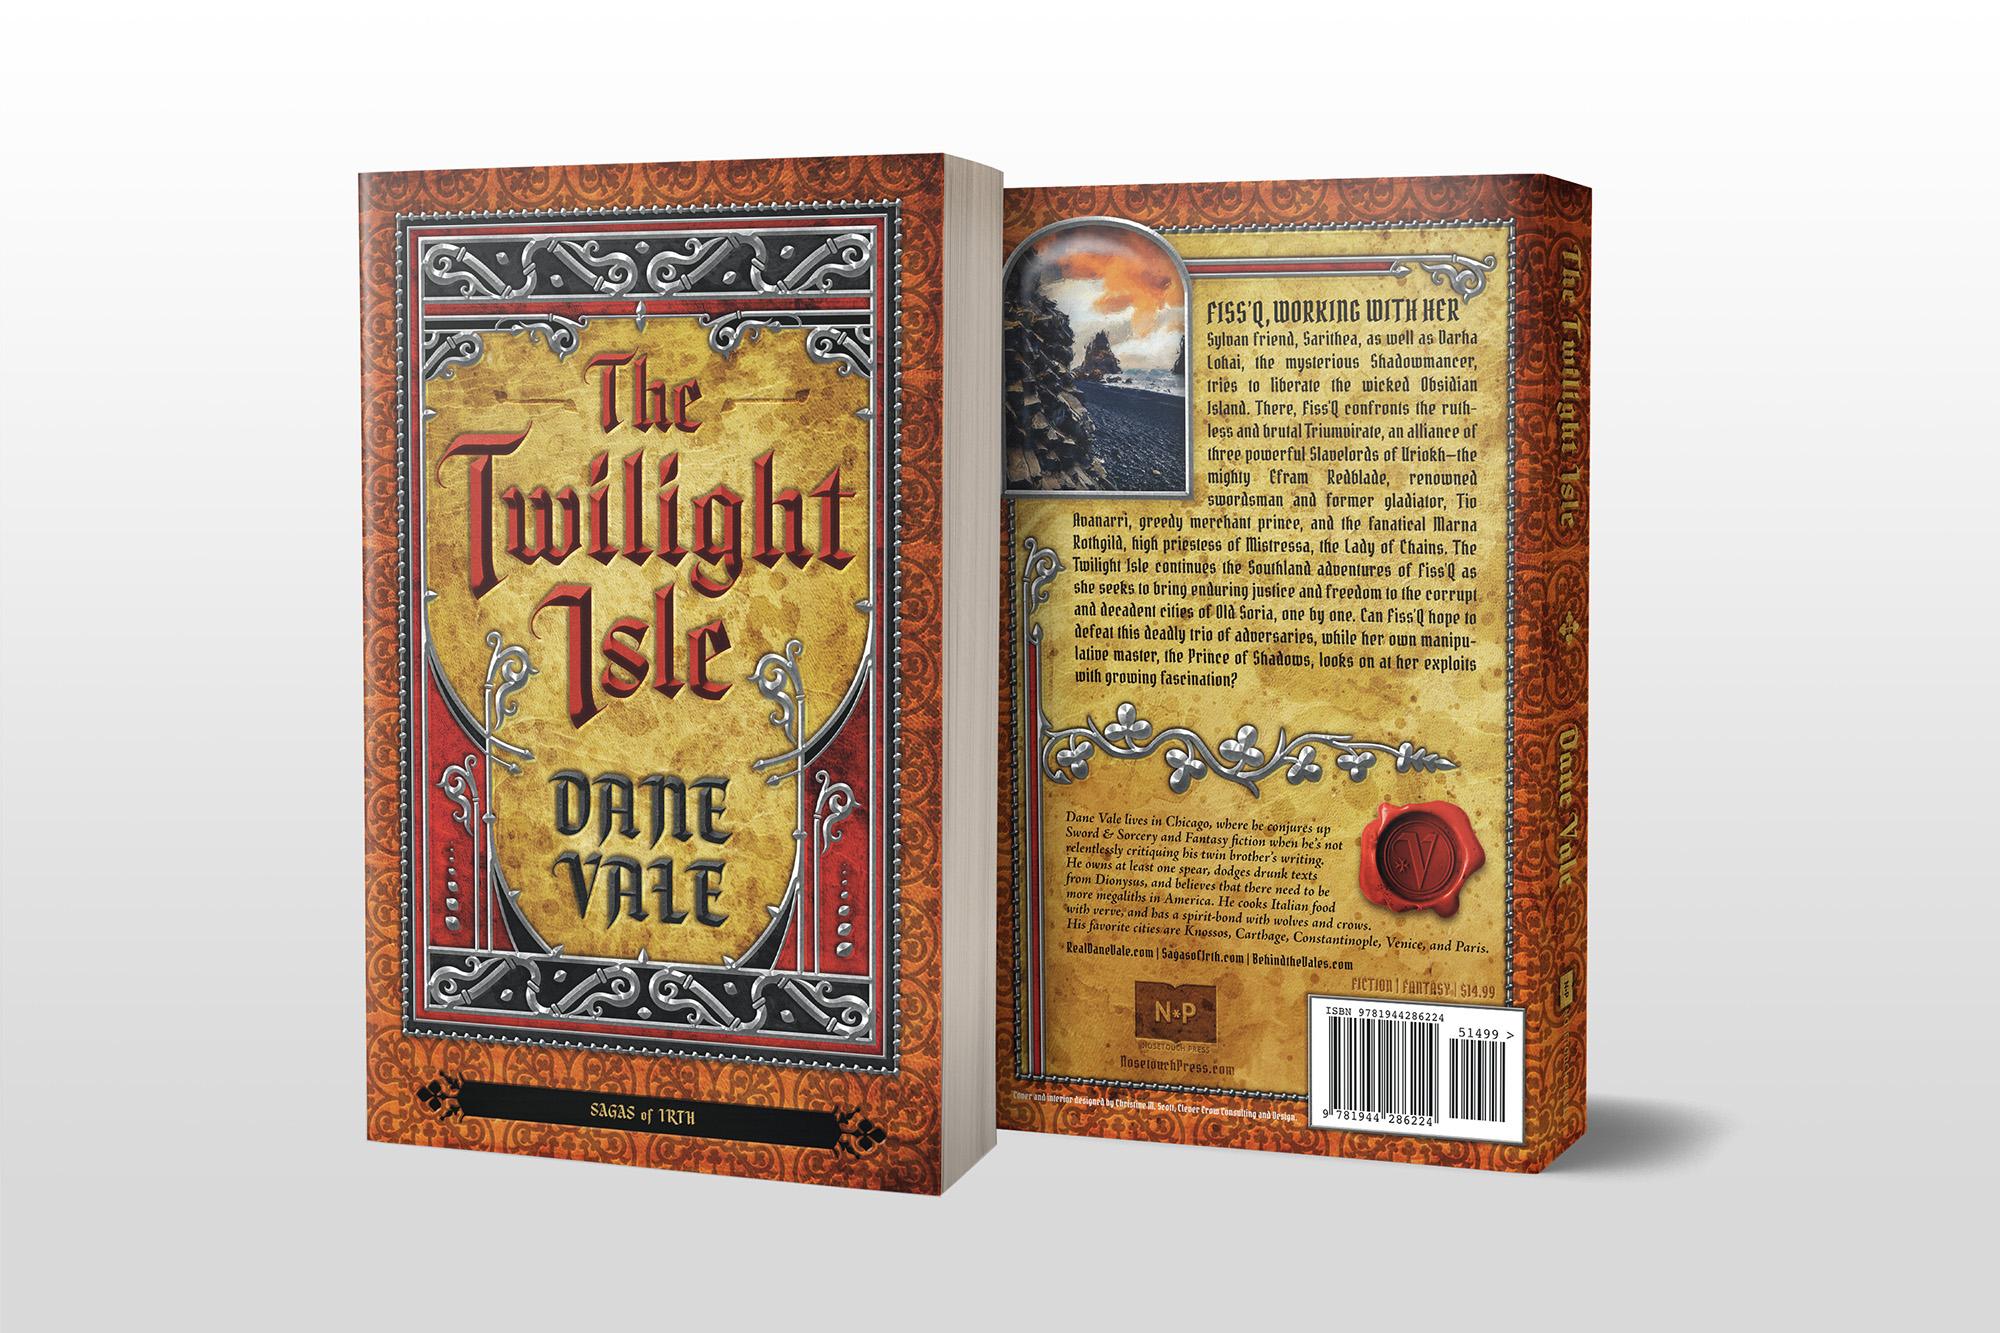 The Twilight Isle Cover & Interior Design